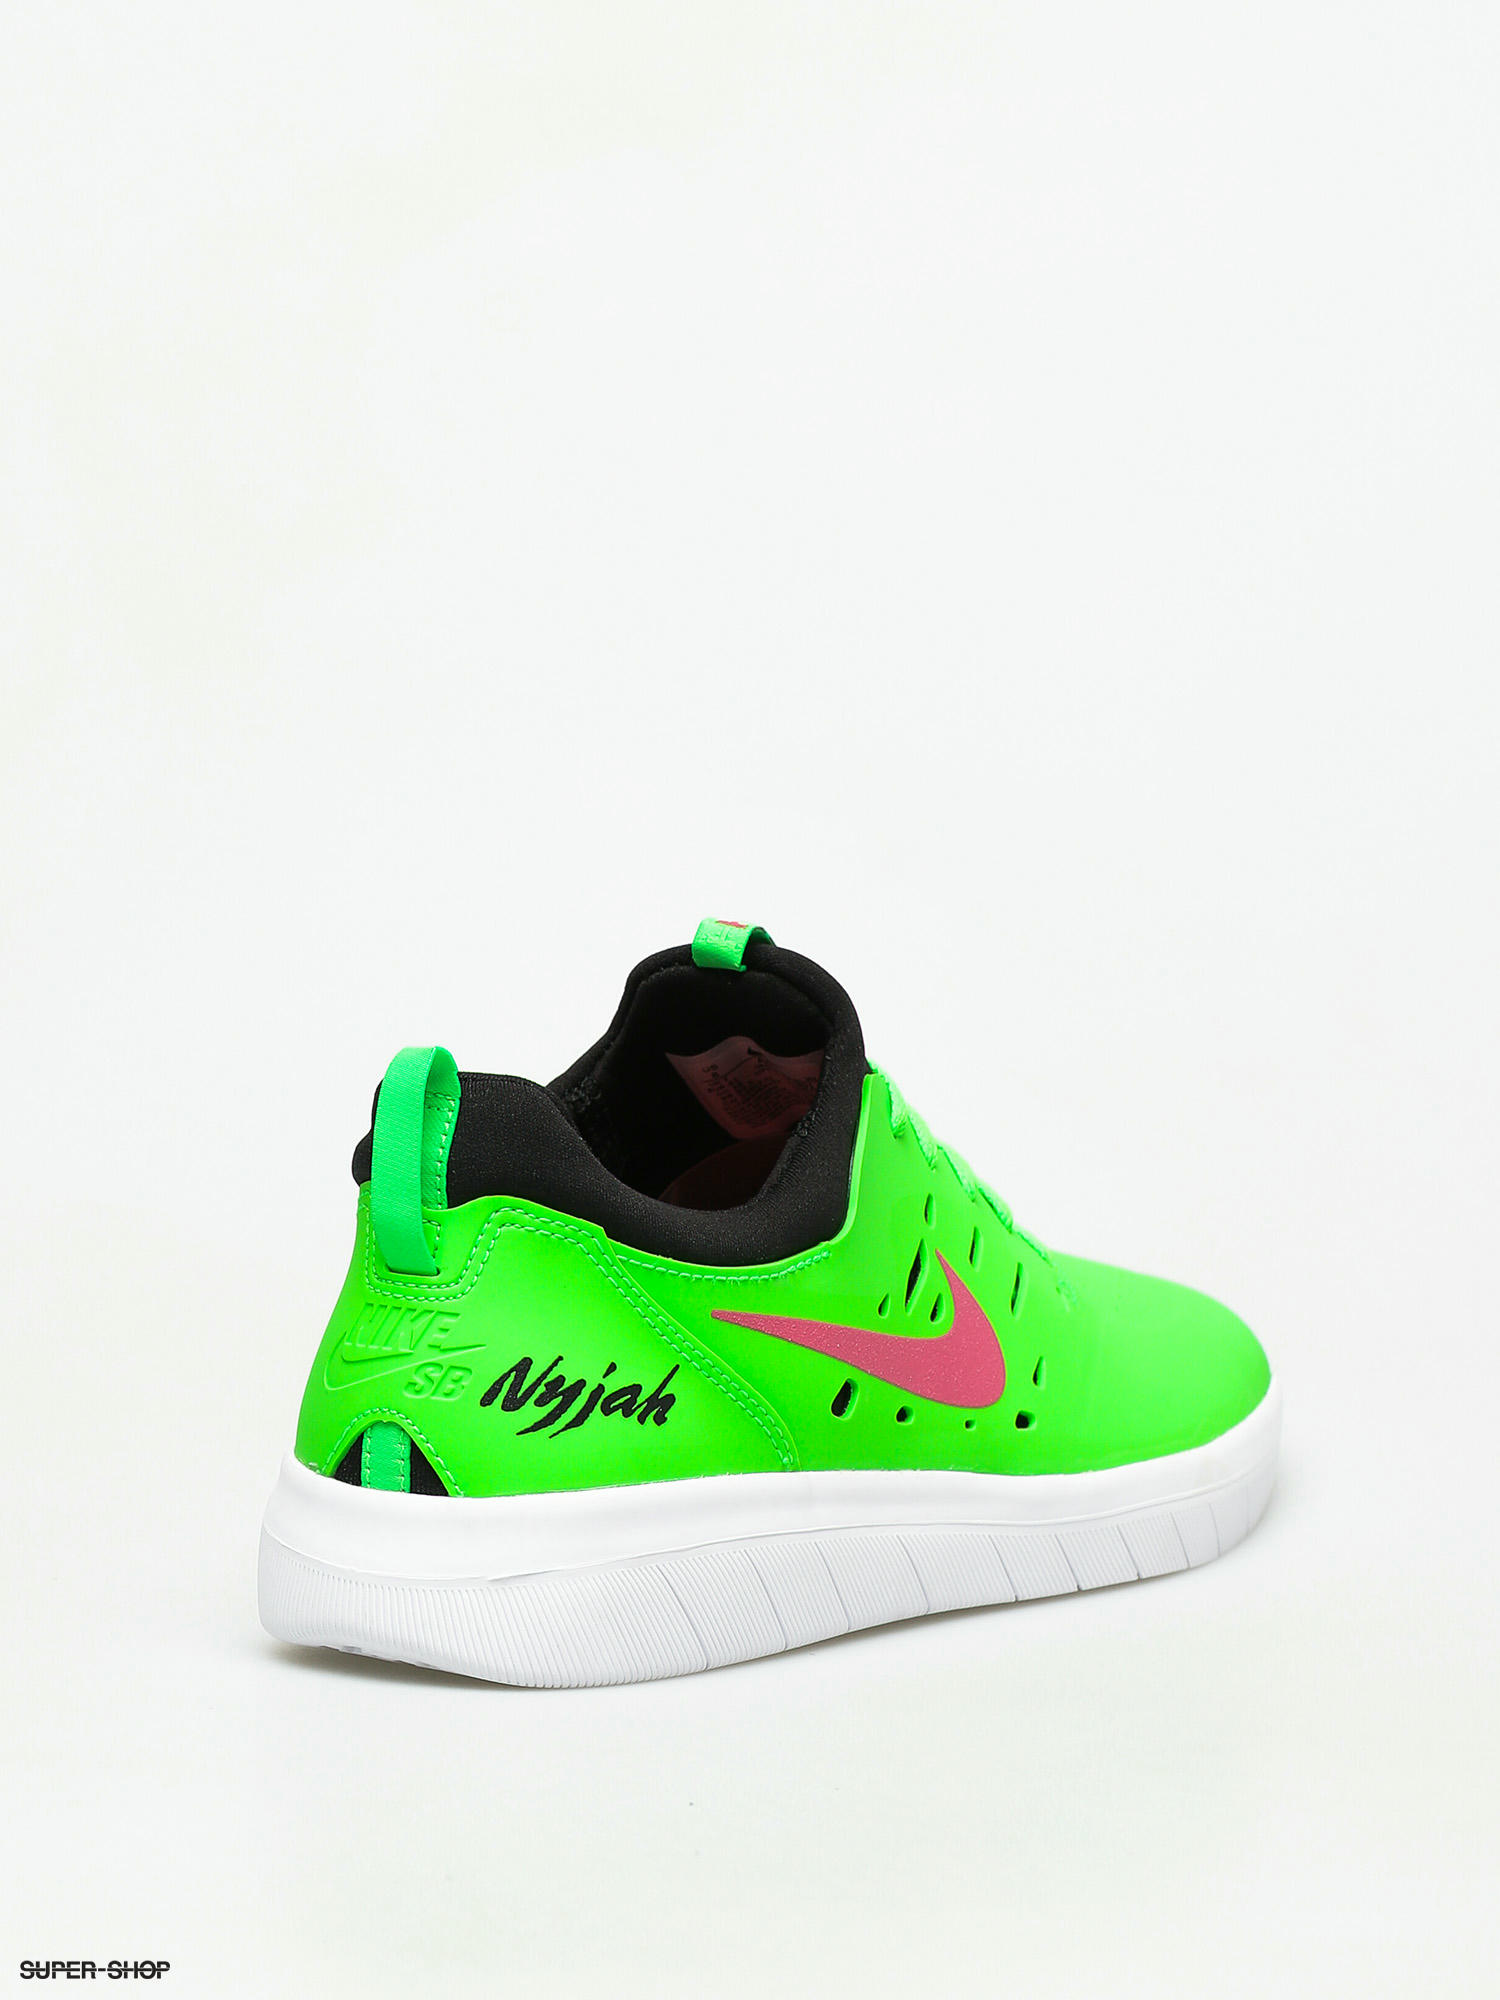 nyjah green shoes